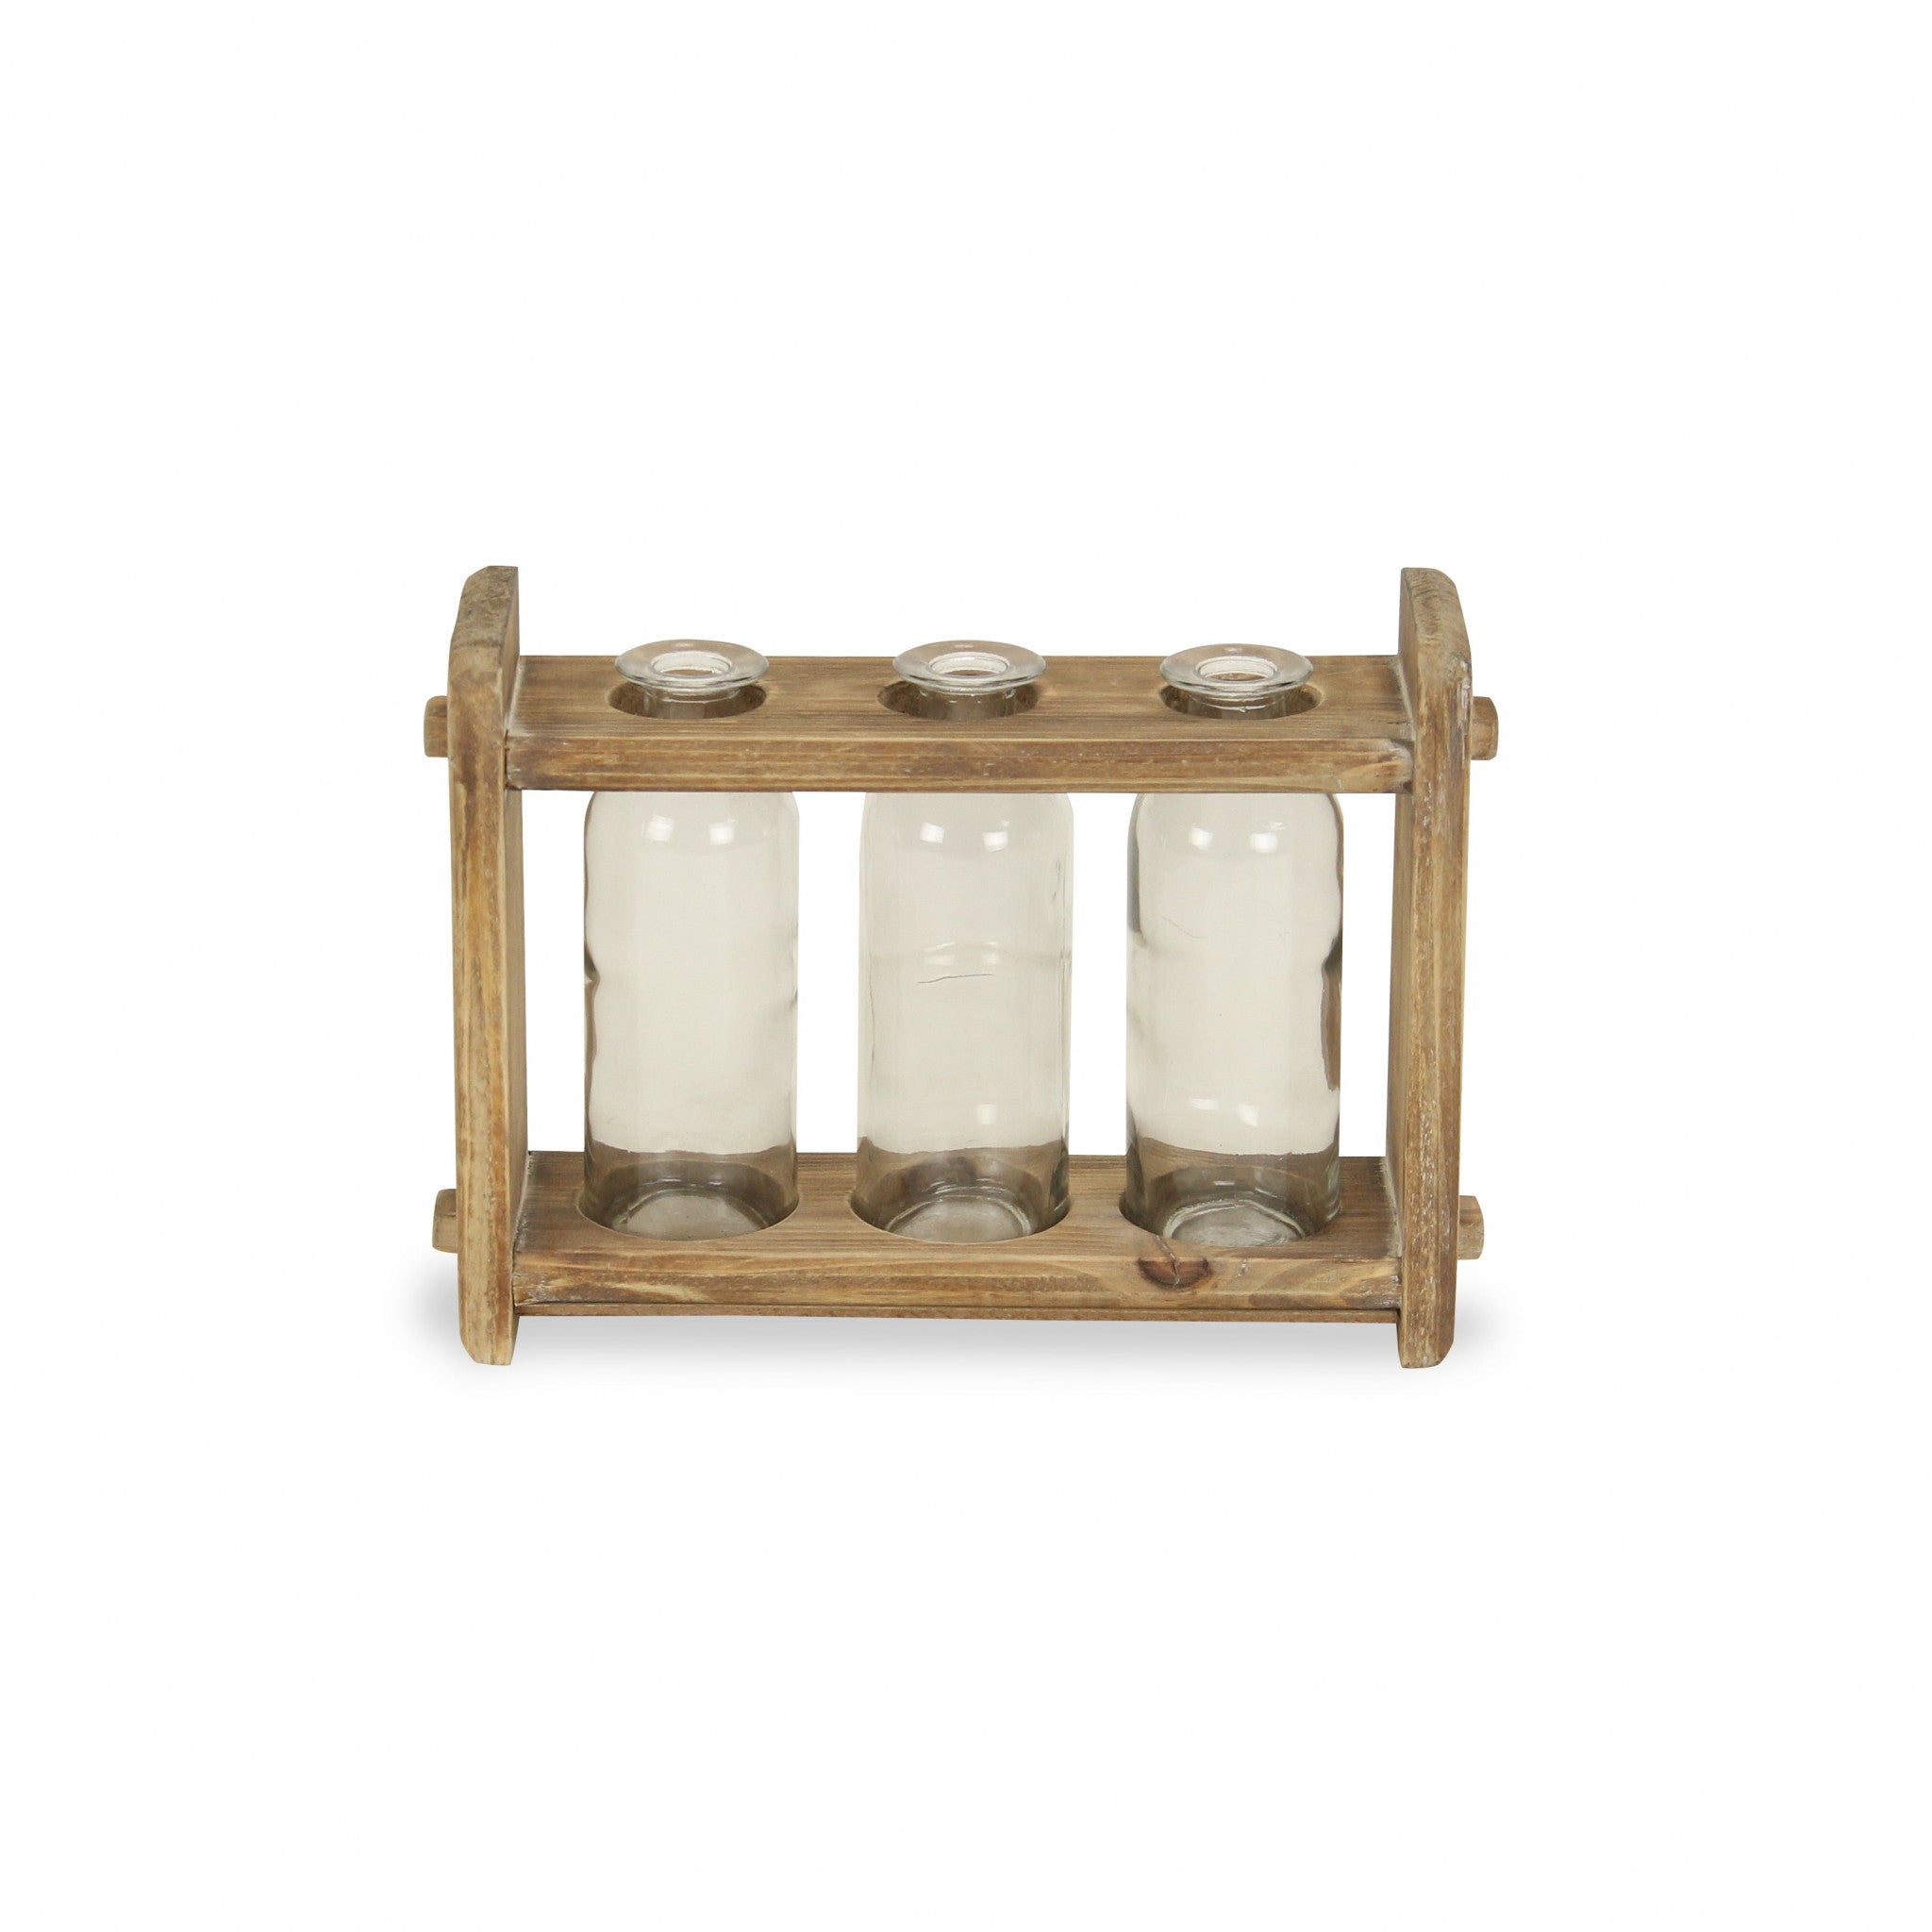 7" Set of Three Glass Jars in a Wood Rack